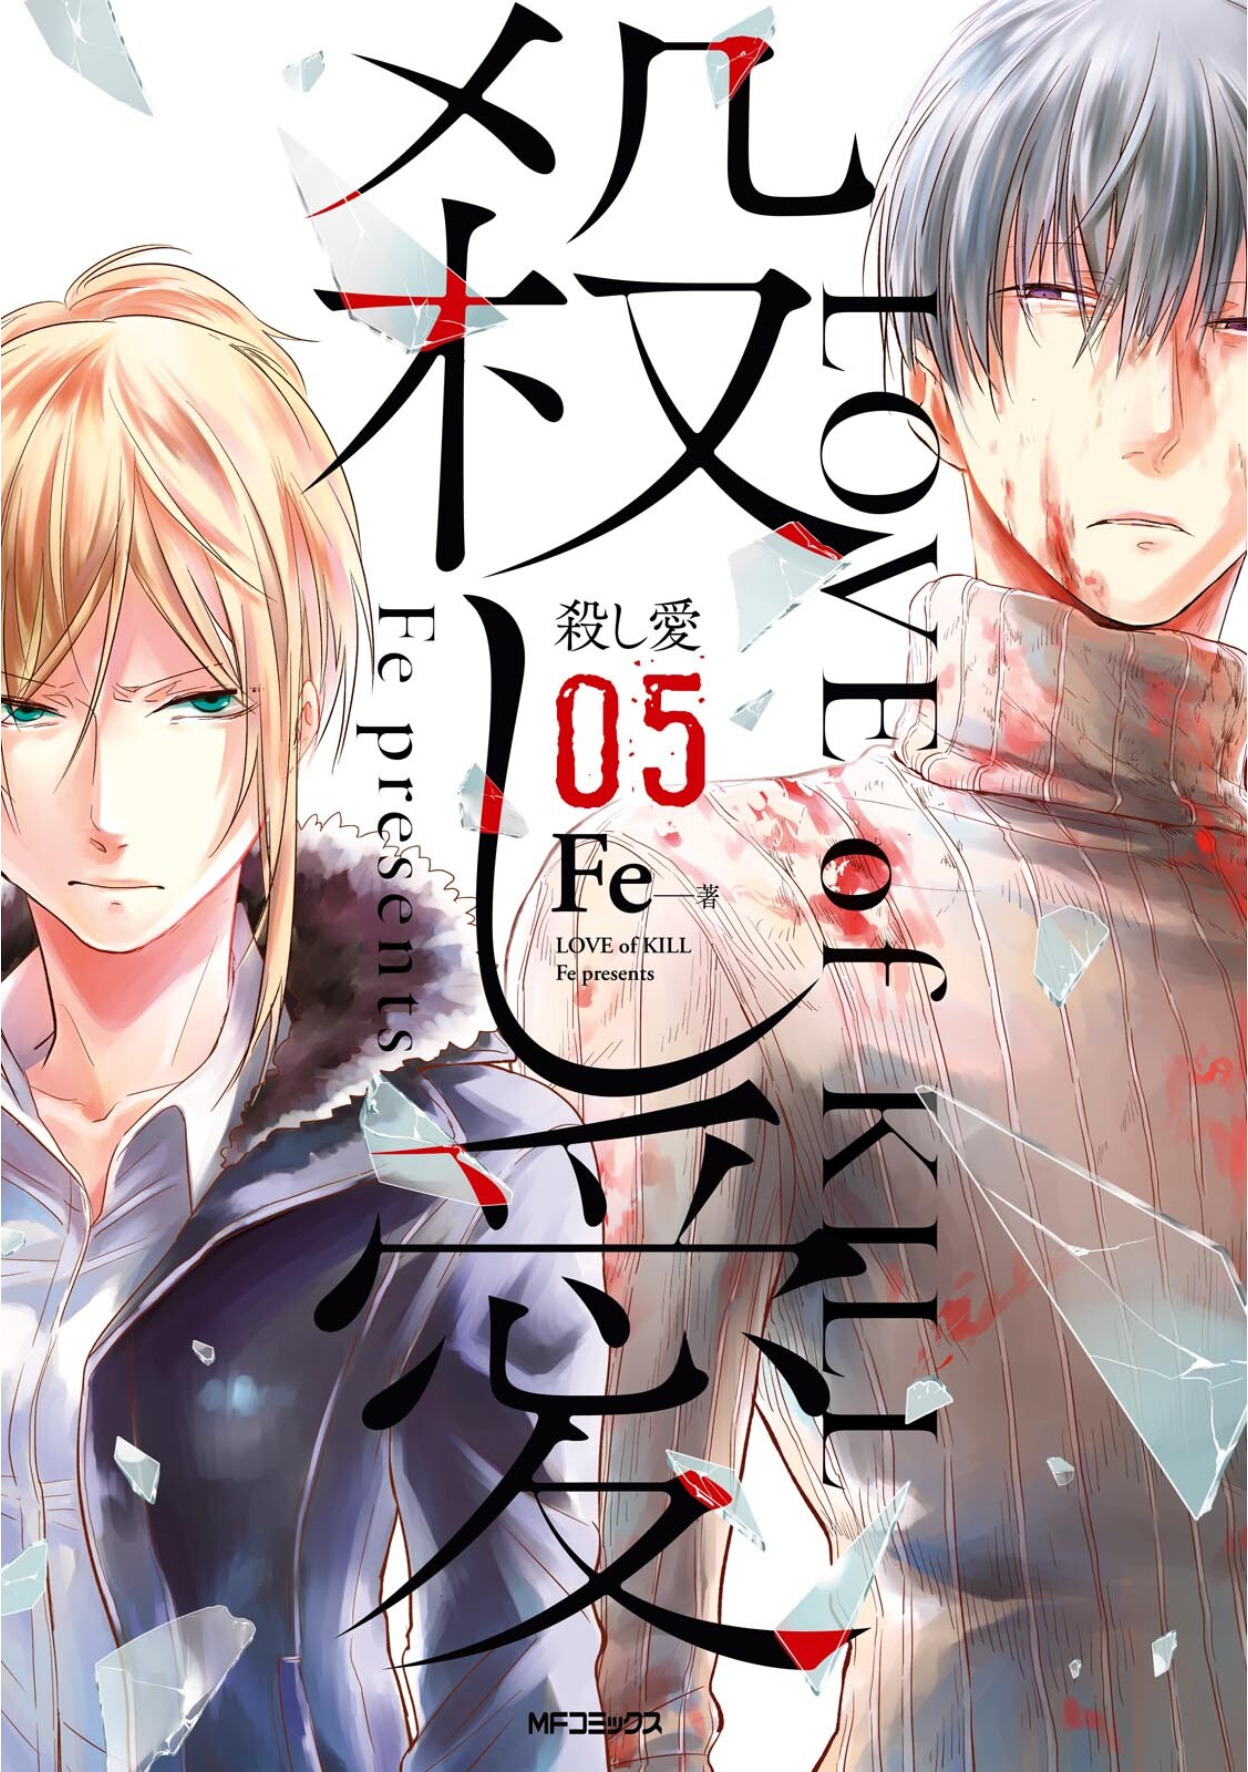 Kudasai on X: Fe, autora del manga Koroshi Ai (Love of Kill